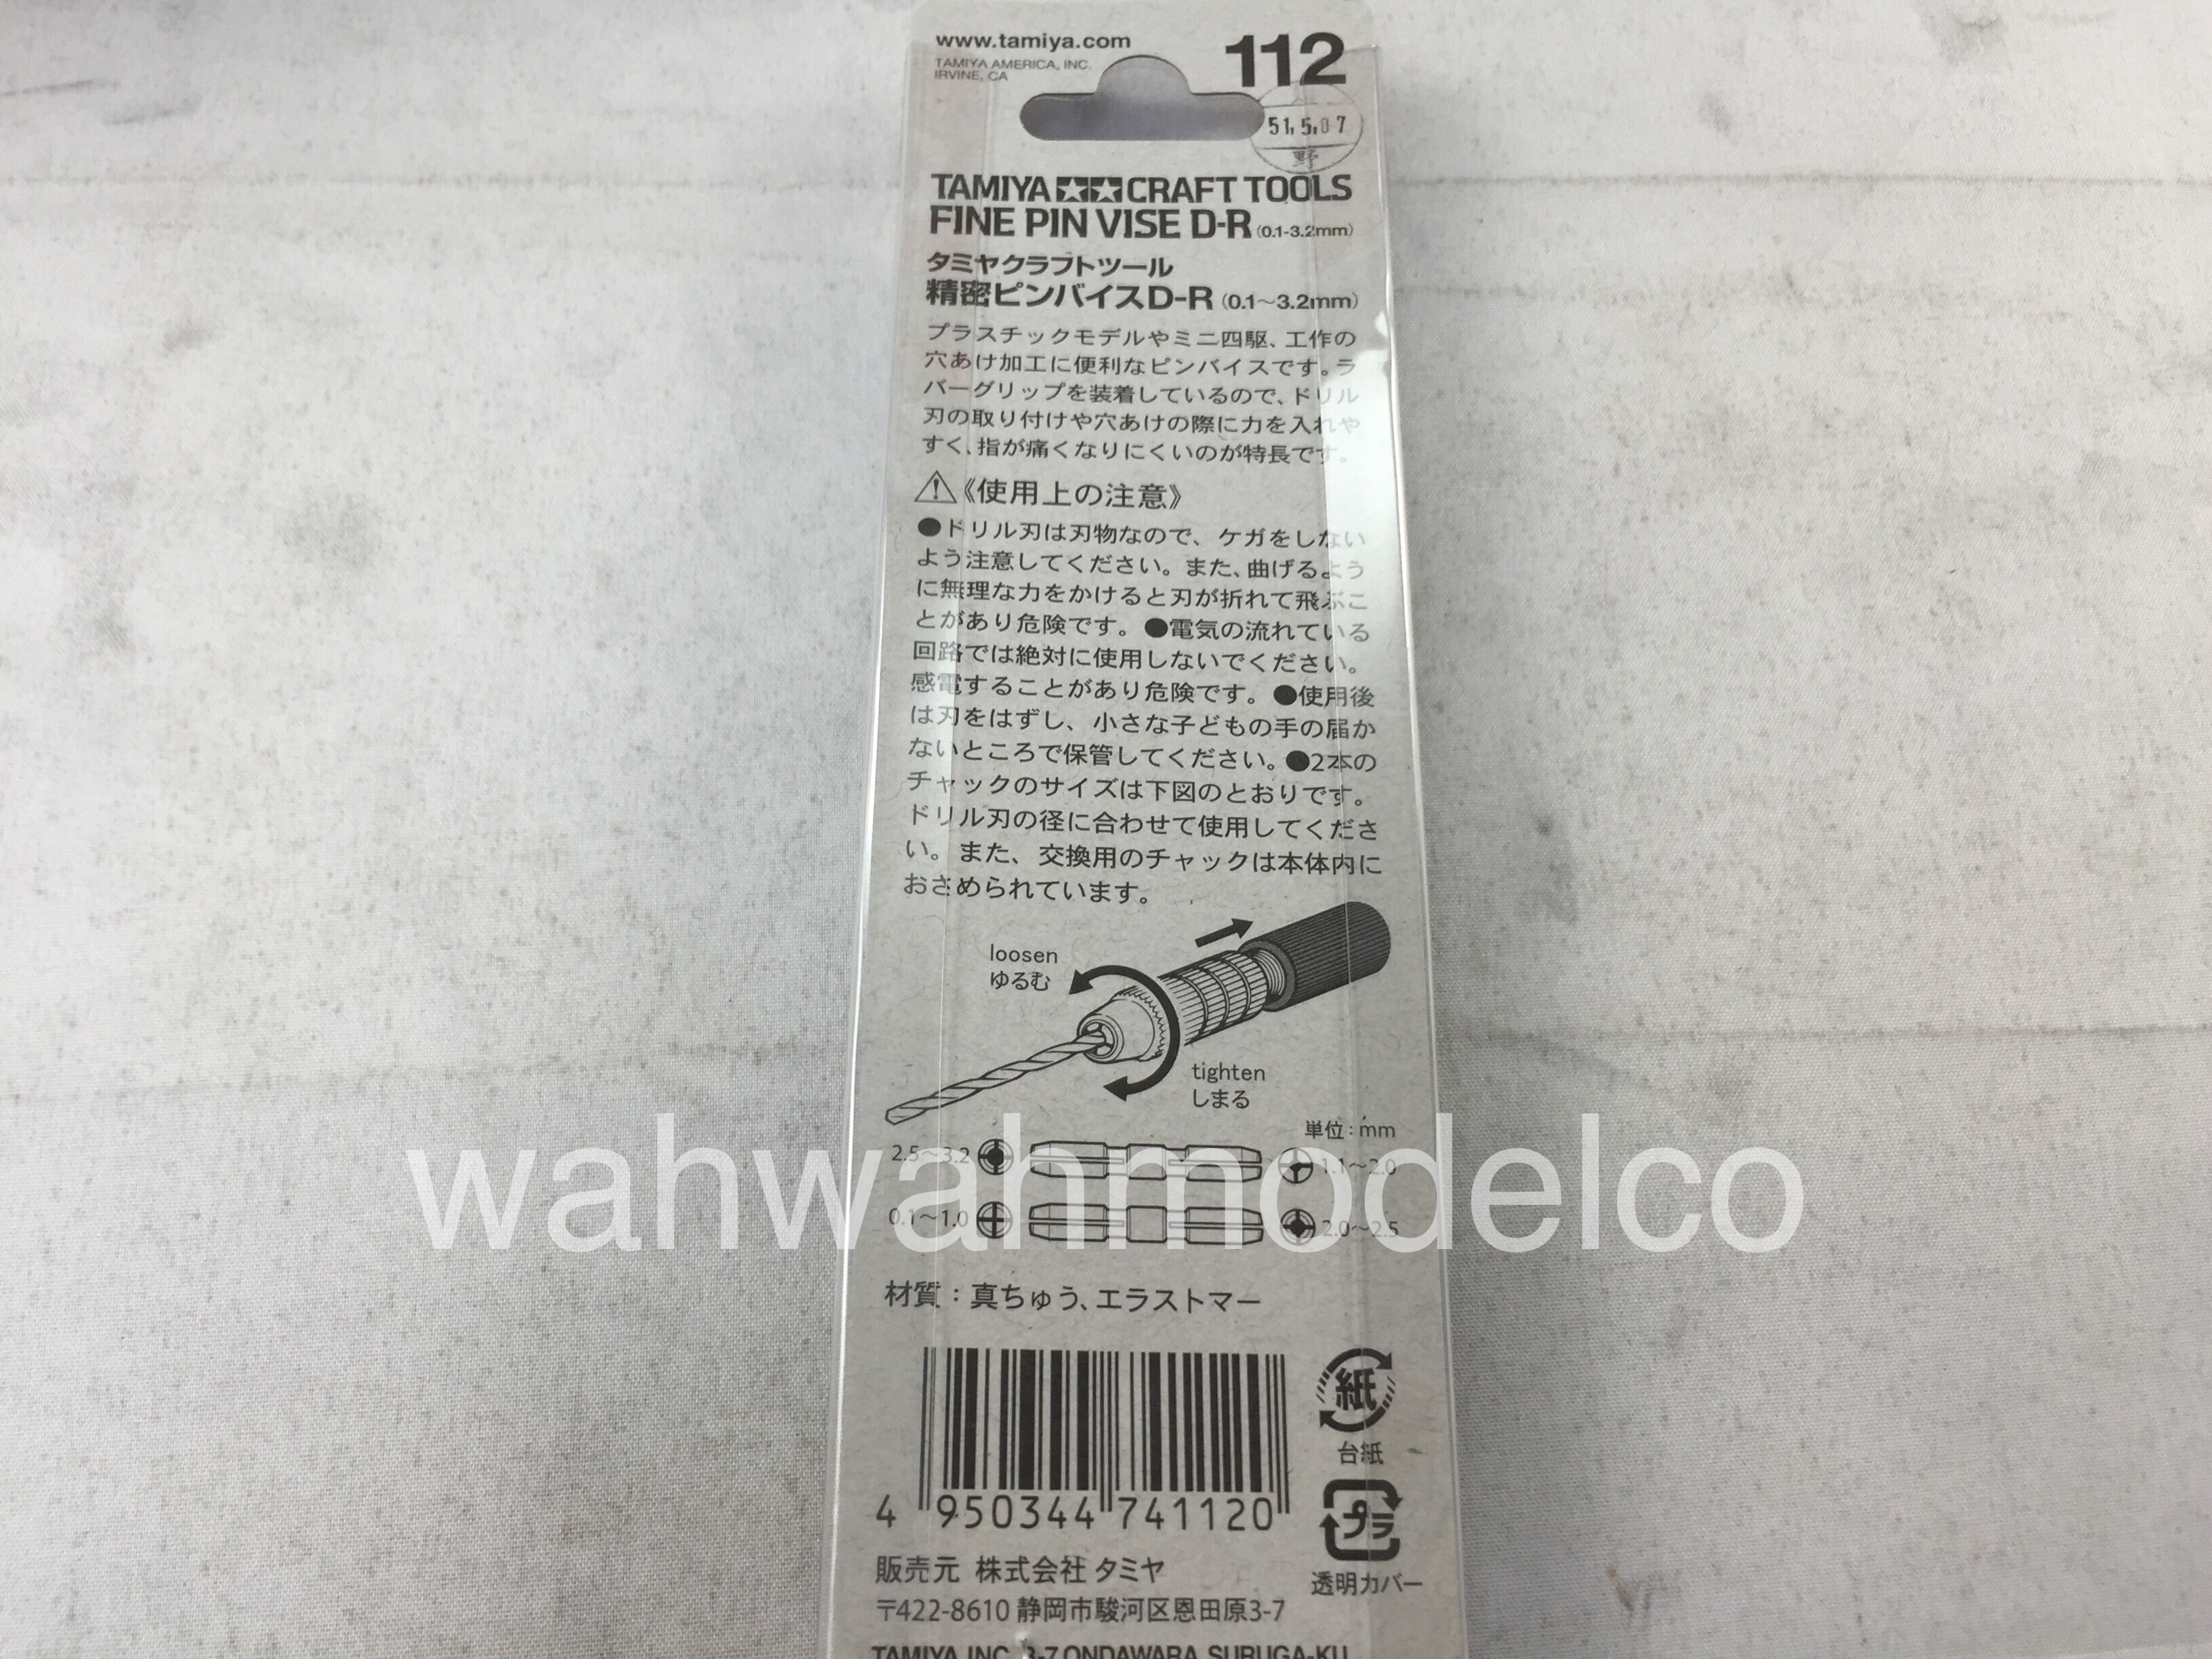 74112 0.1-3.2mm Tamiya Model Craft Tools Fine Pin Vise D-R 